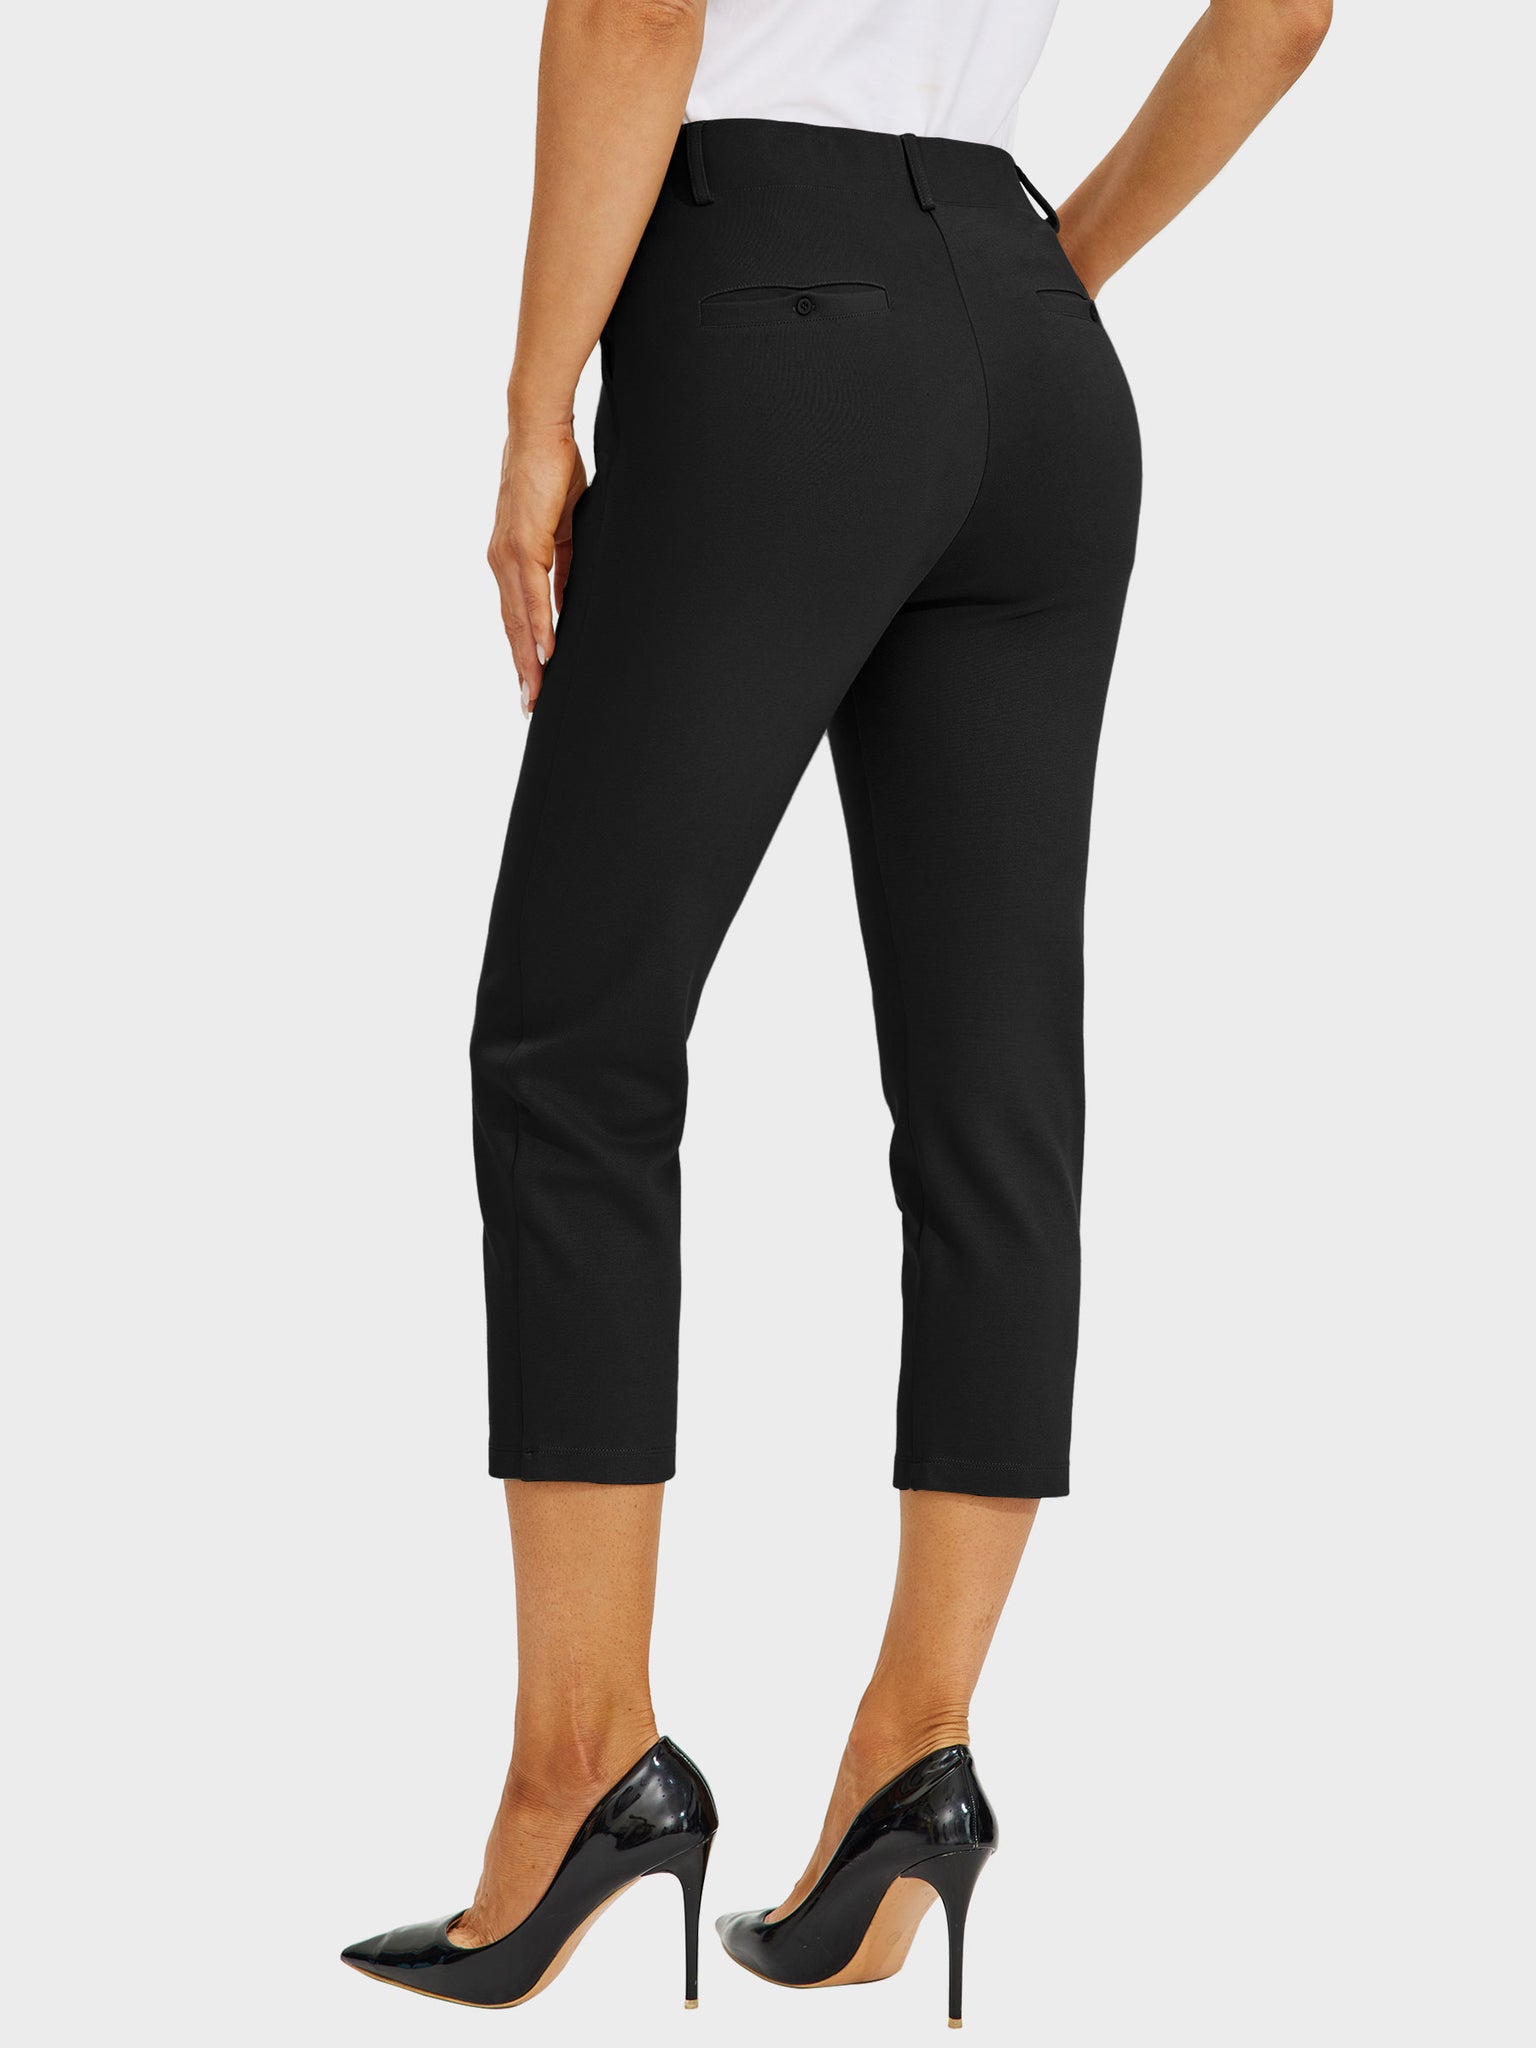 Women's Stretch Capri Yoga Dress Pants_Black_model2